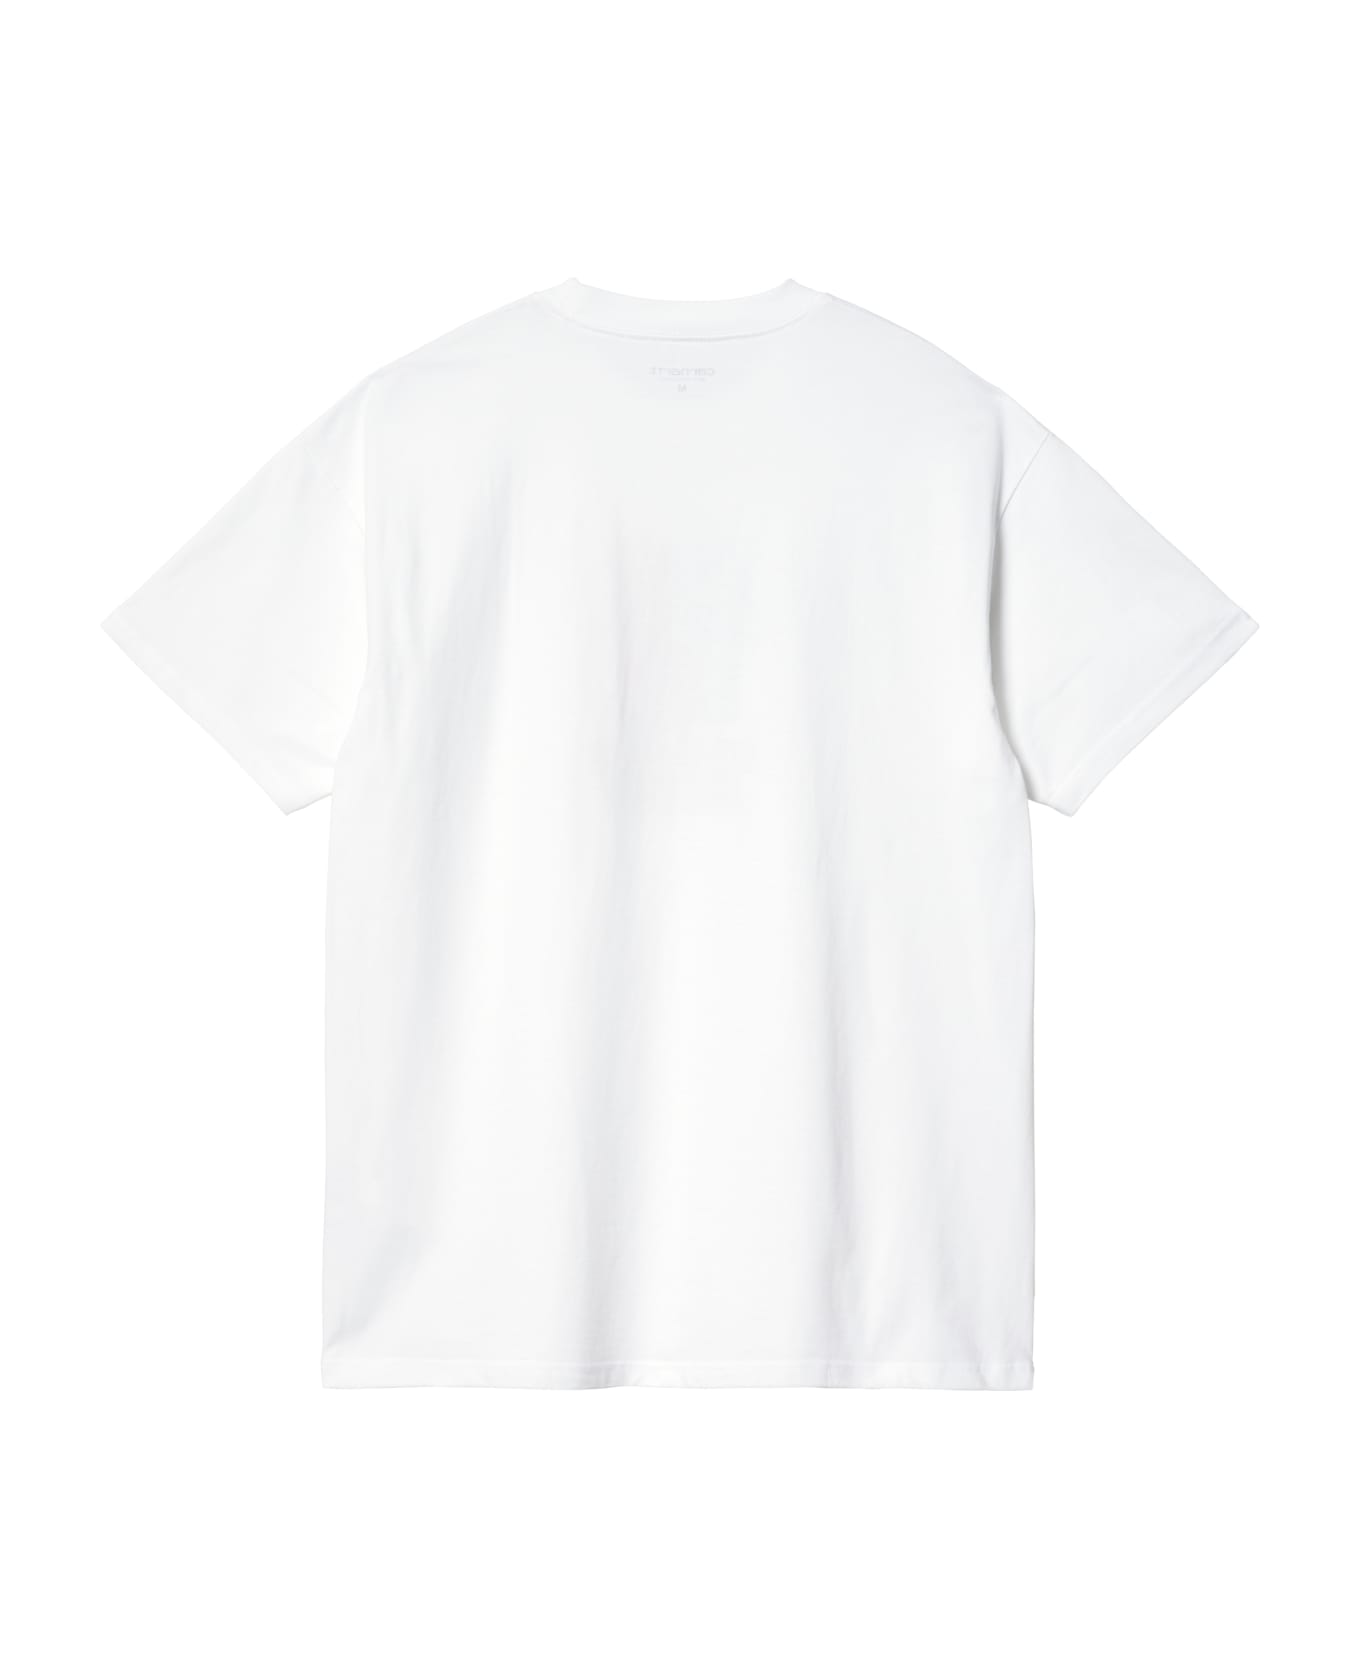 Carhartt S S Gummy T-shirt - White